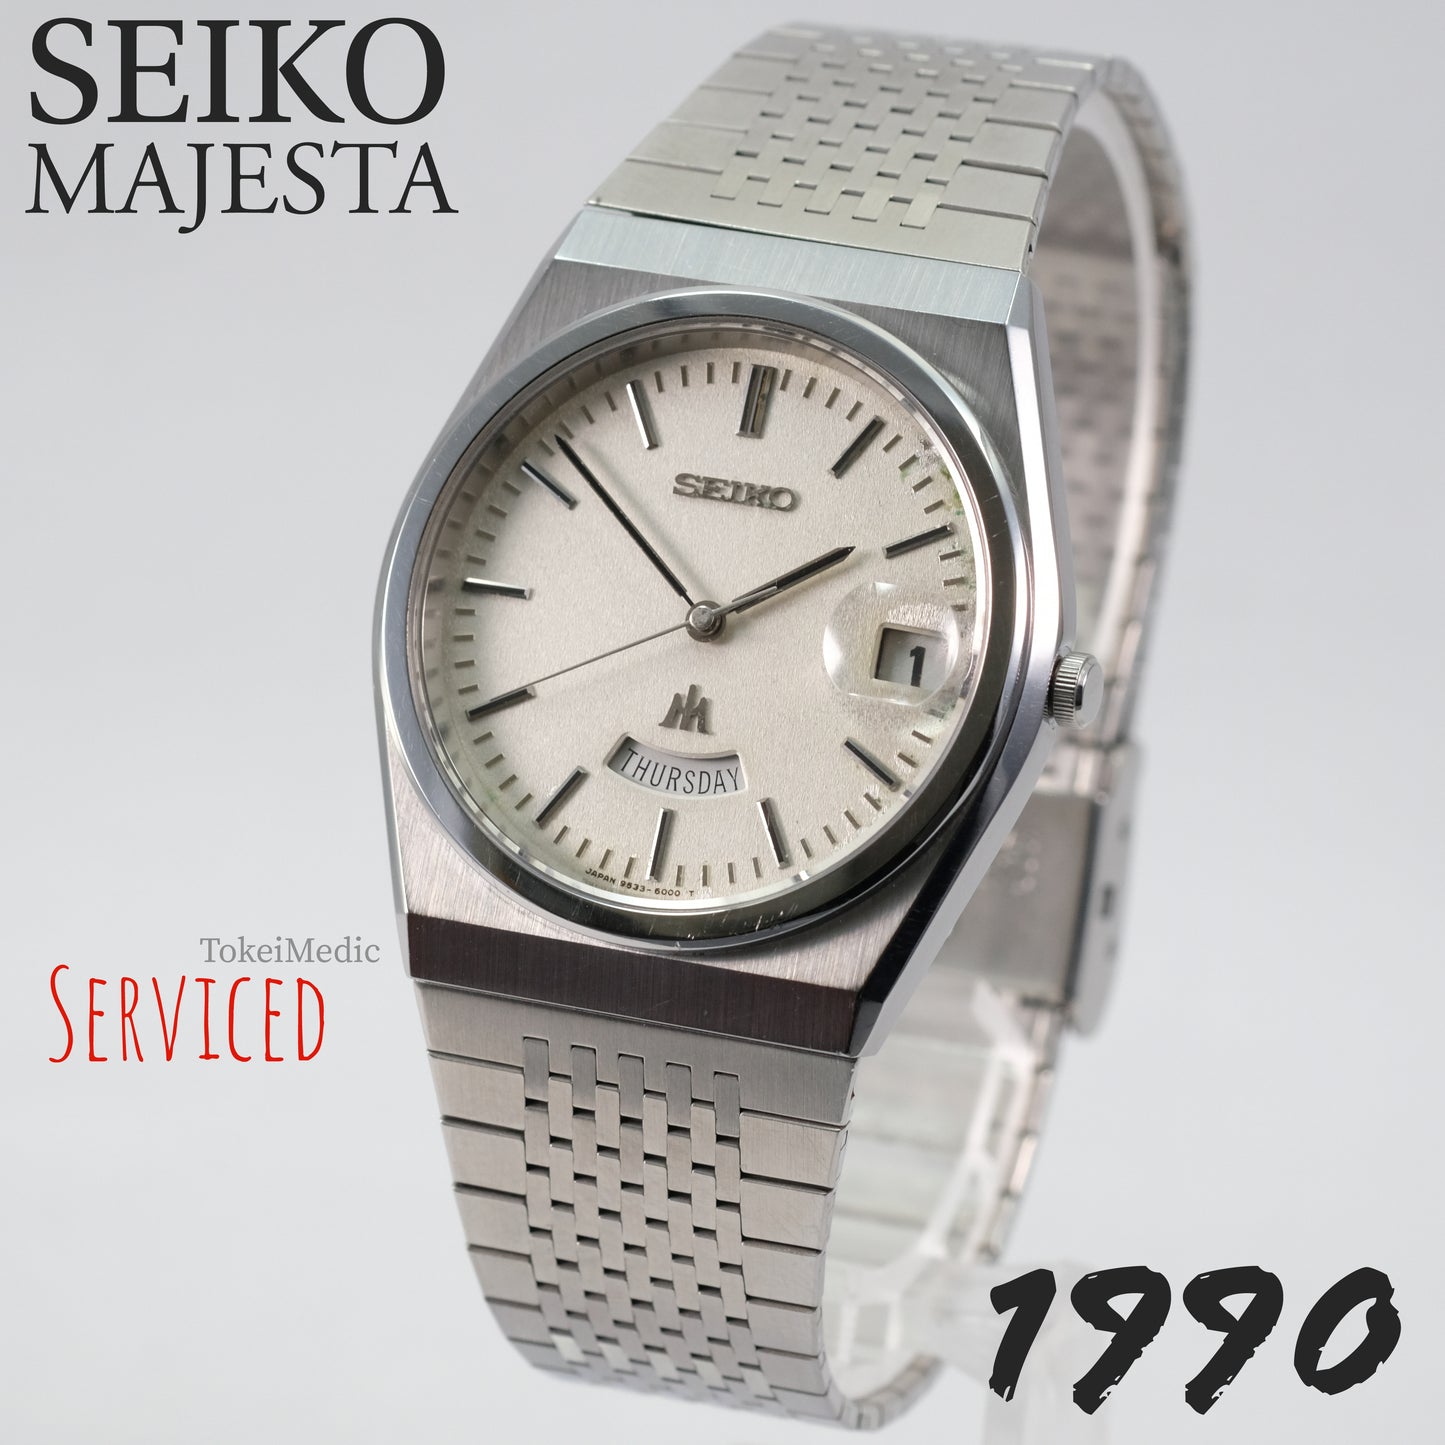 1990 Seiko Majesta 9533-6000